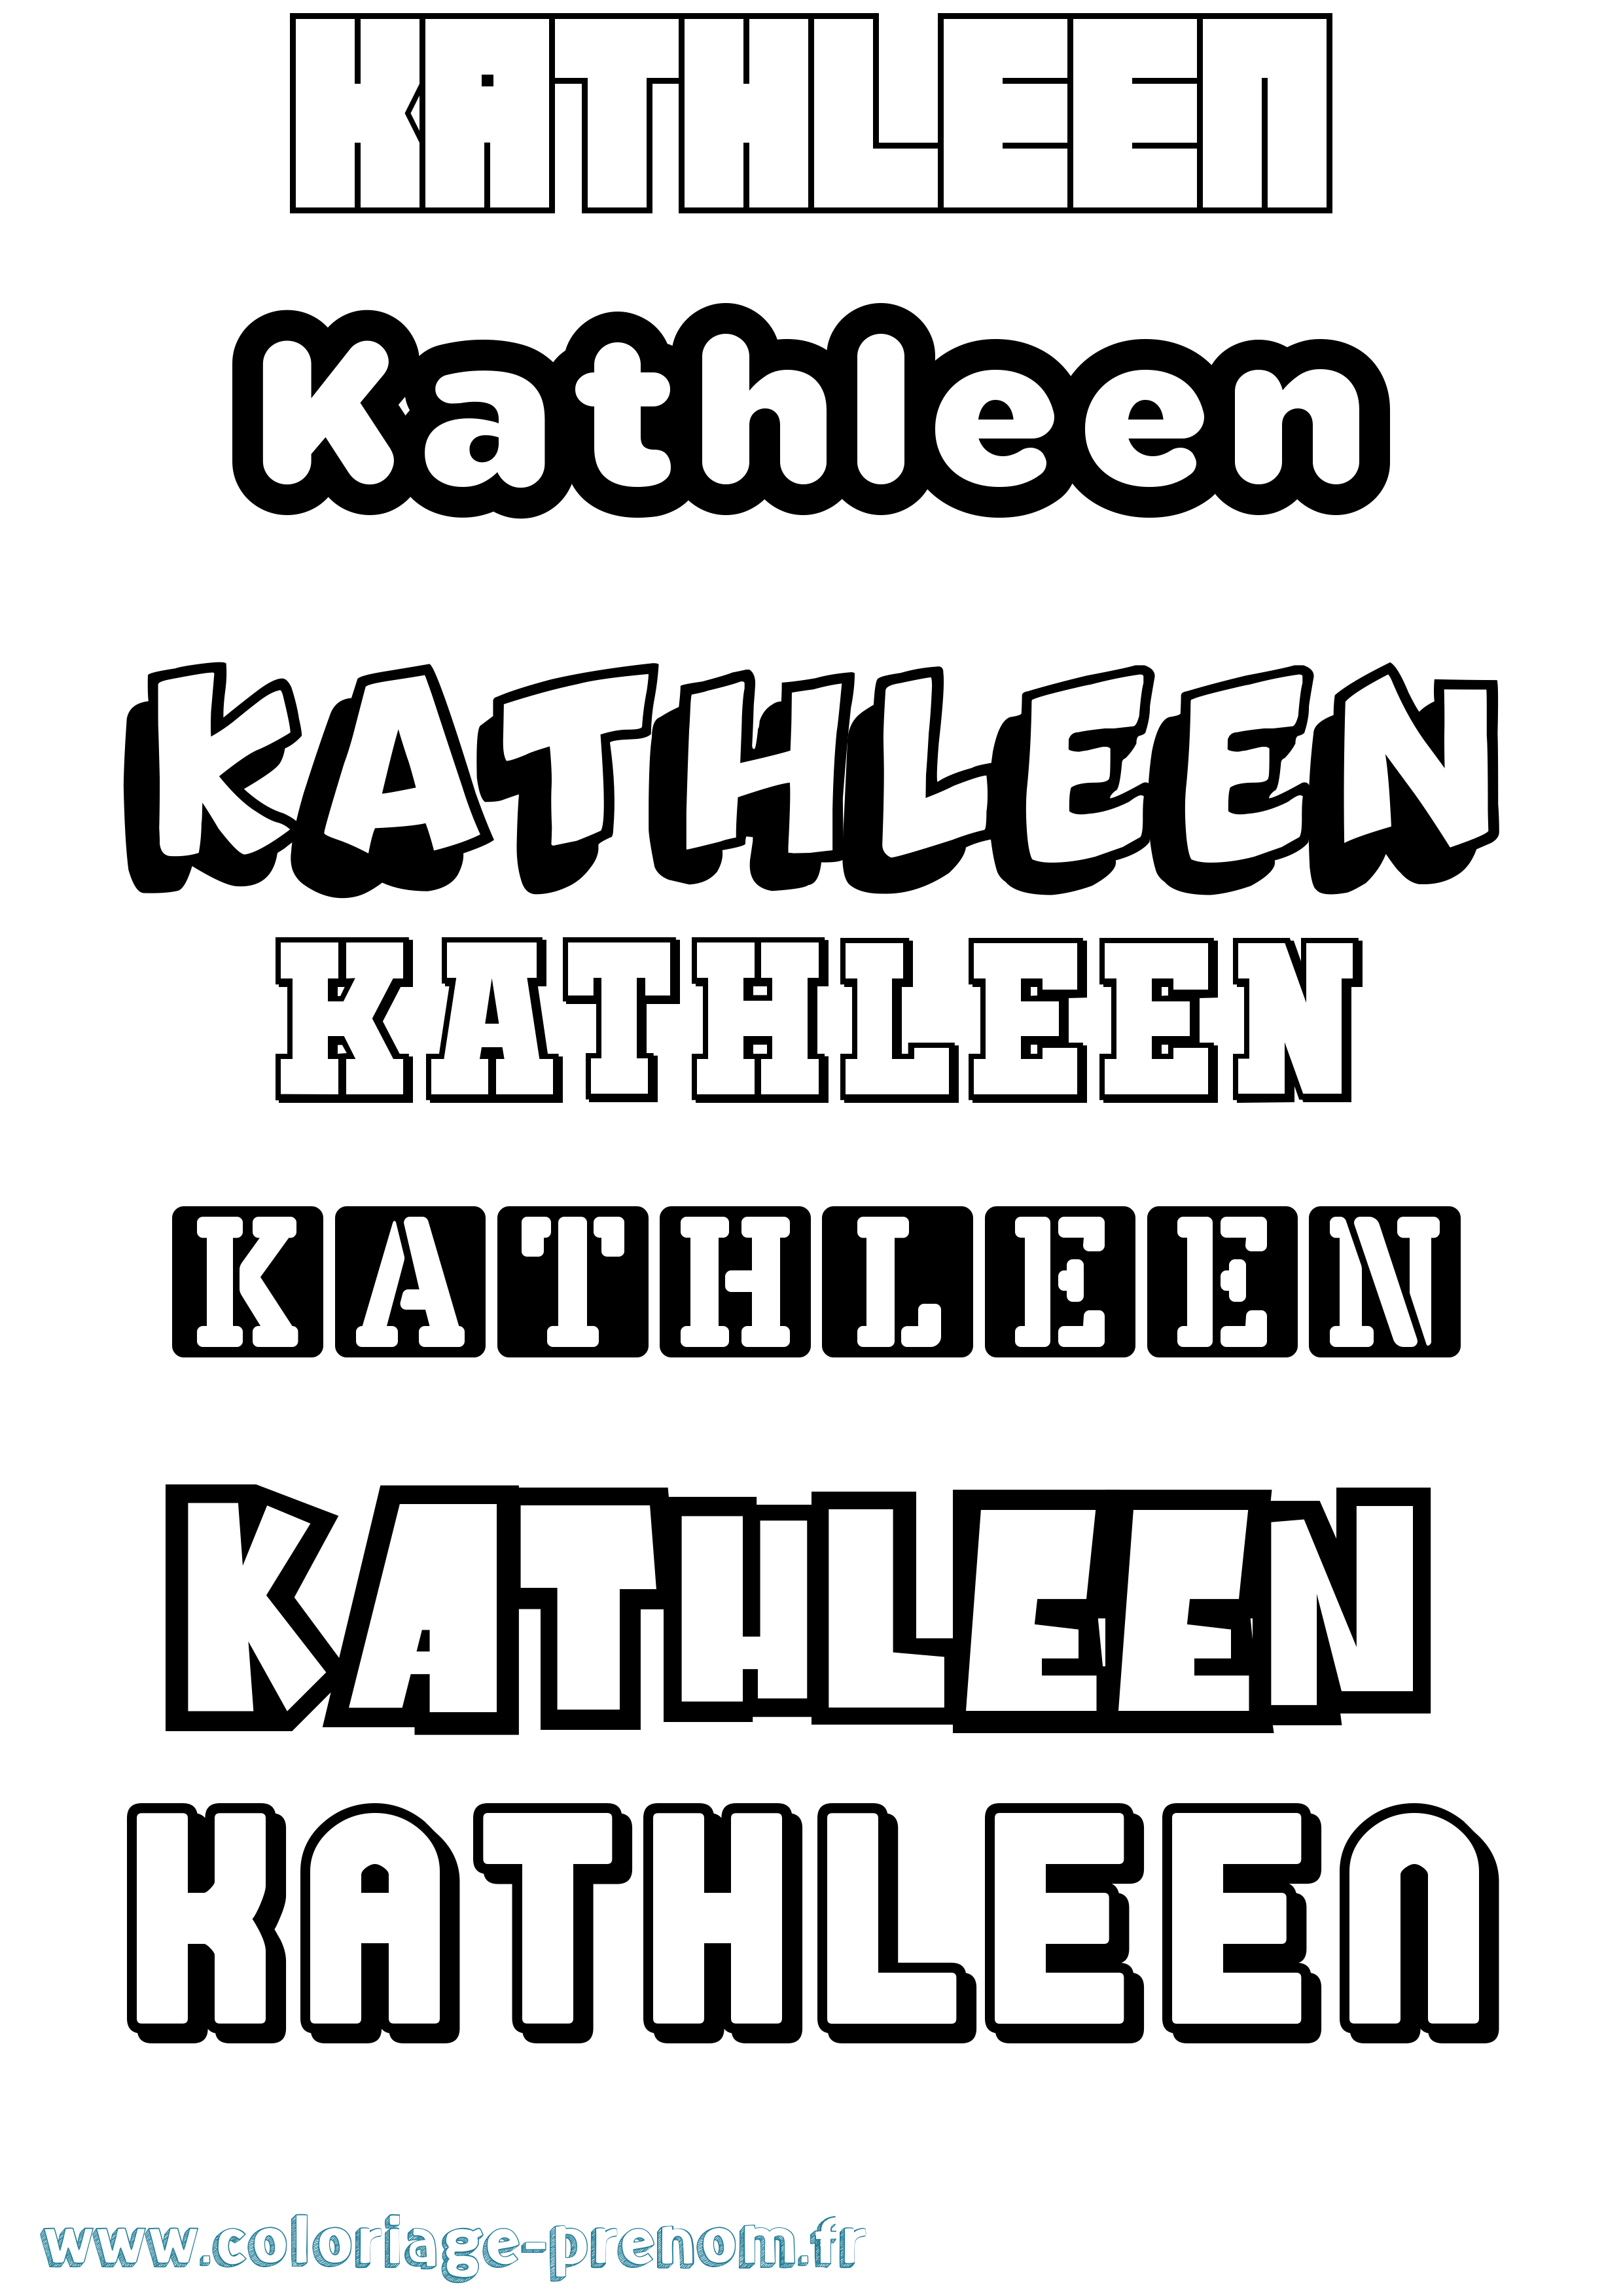 Coloriage prénom Kathleen